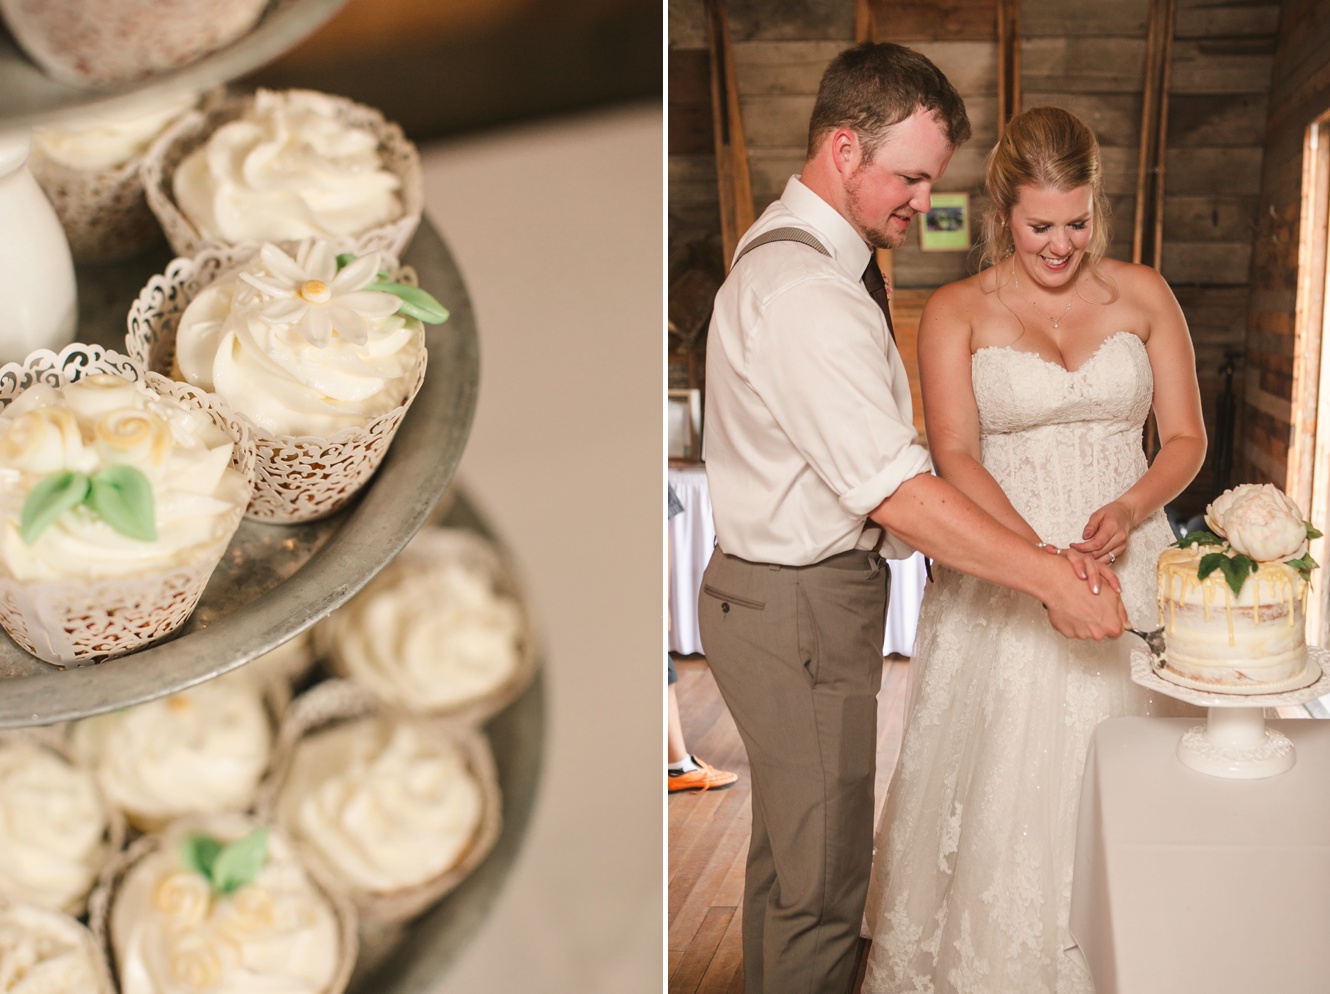 Wedding cake cutting photo